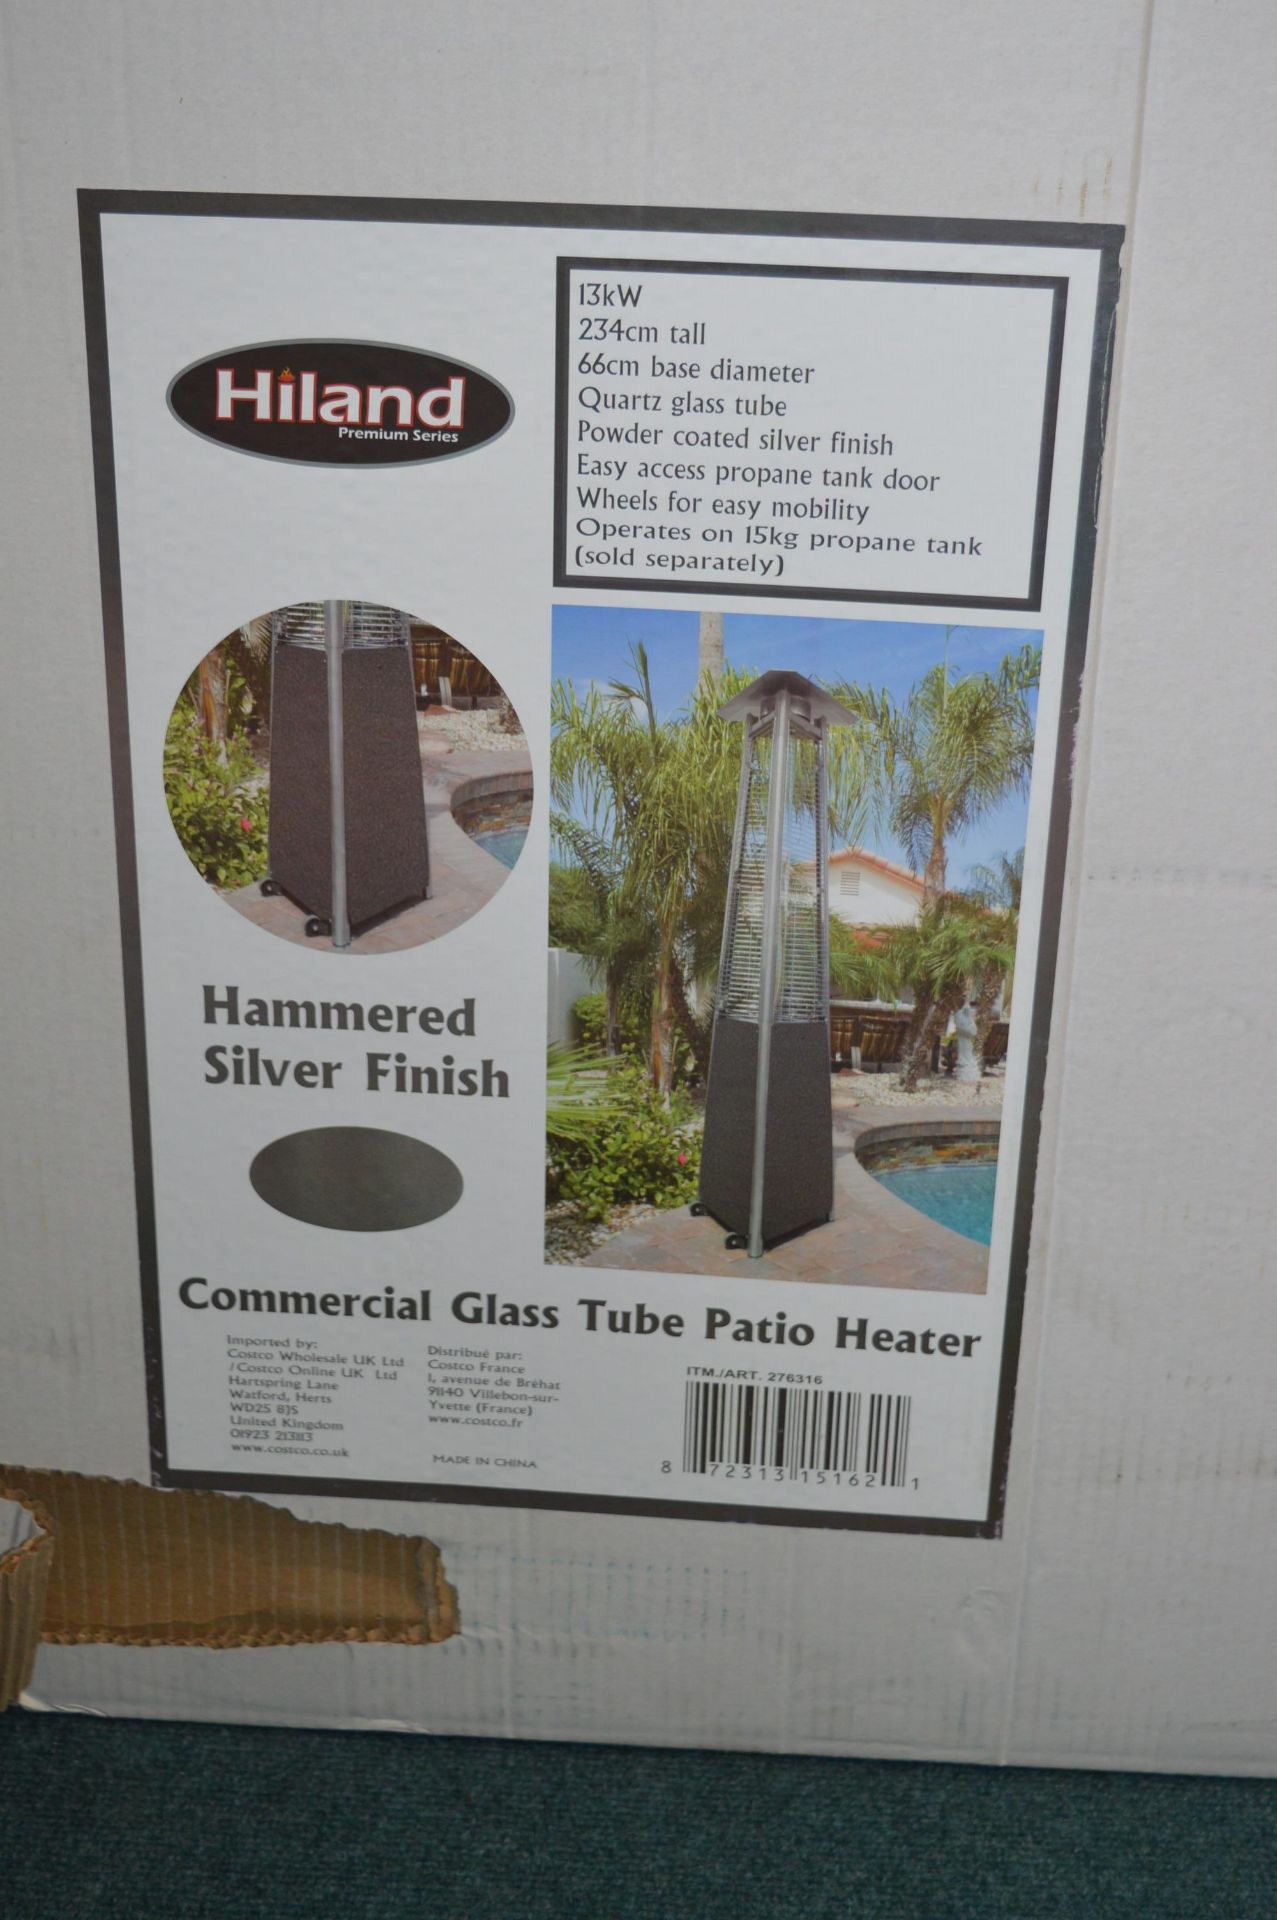 *Highland Glass Tube Patio Heater